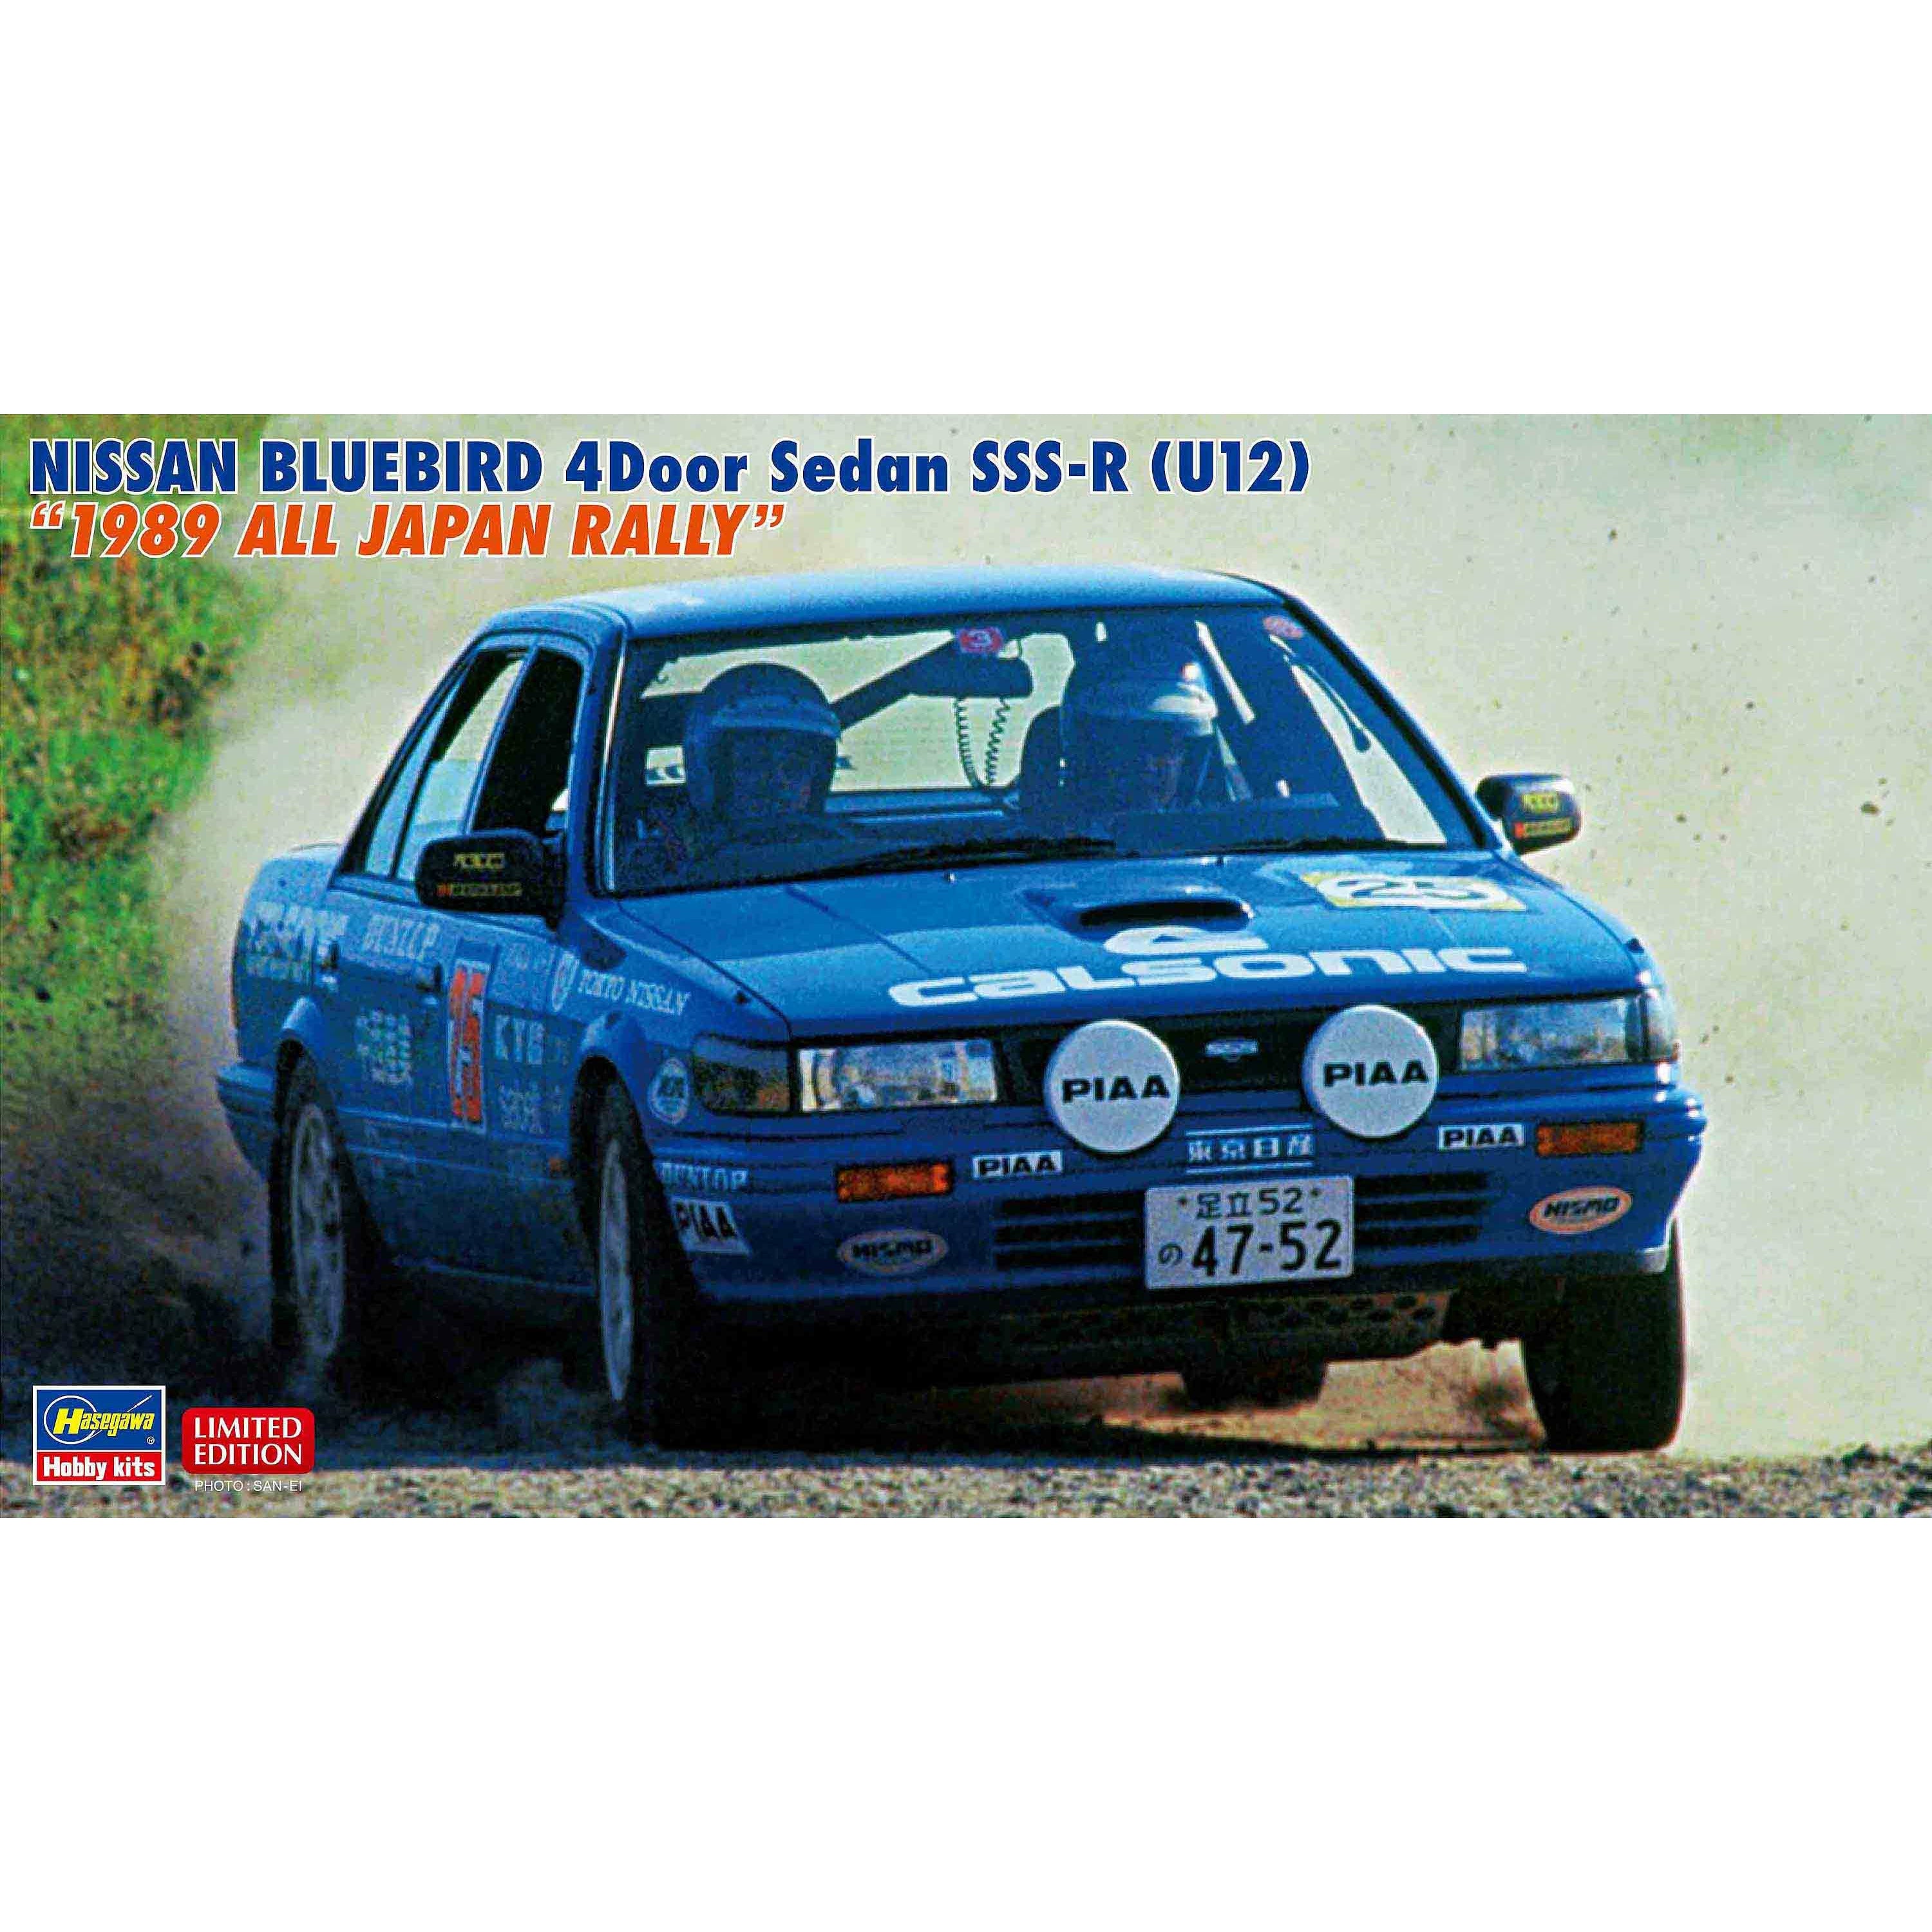 Nissan Bluebird 4 Door Sedan SSS-R (U12) '1989 All Japan Rally' 1/24 Model Car Kit #20541 by Hasegawa